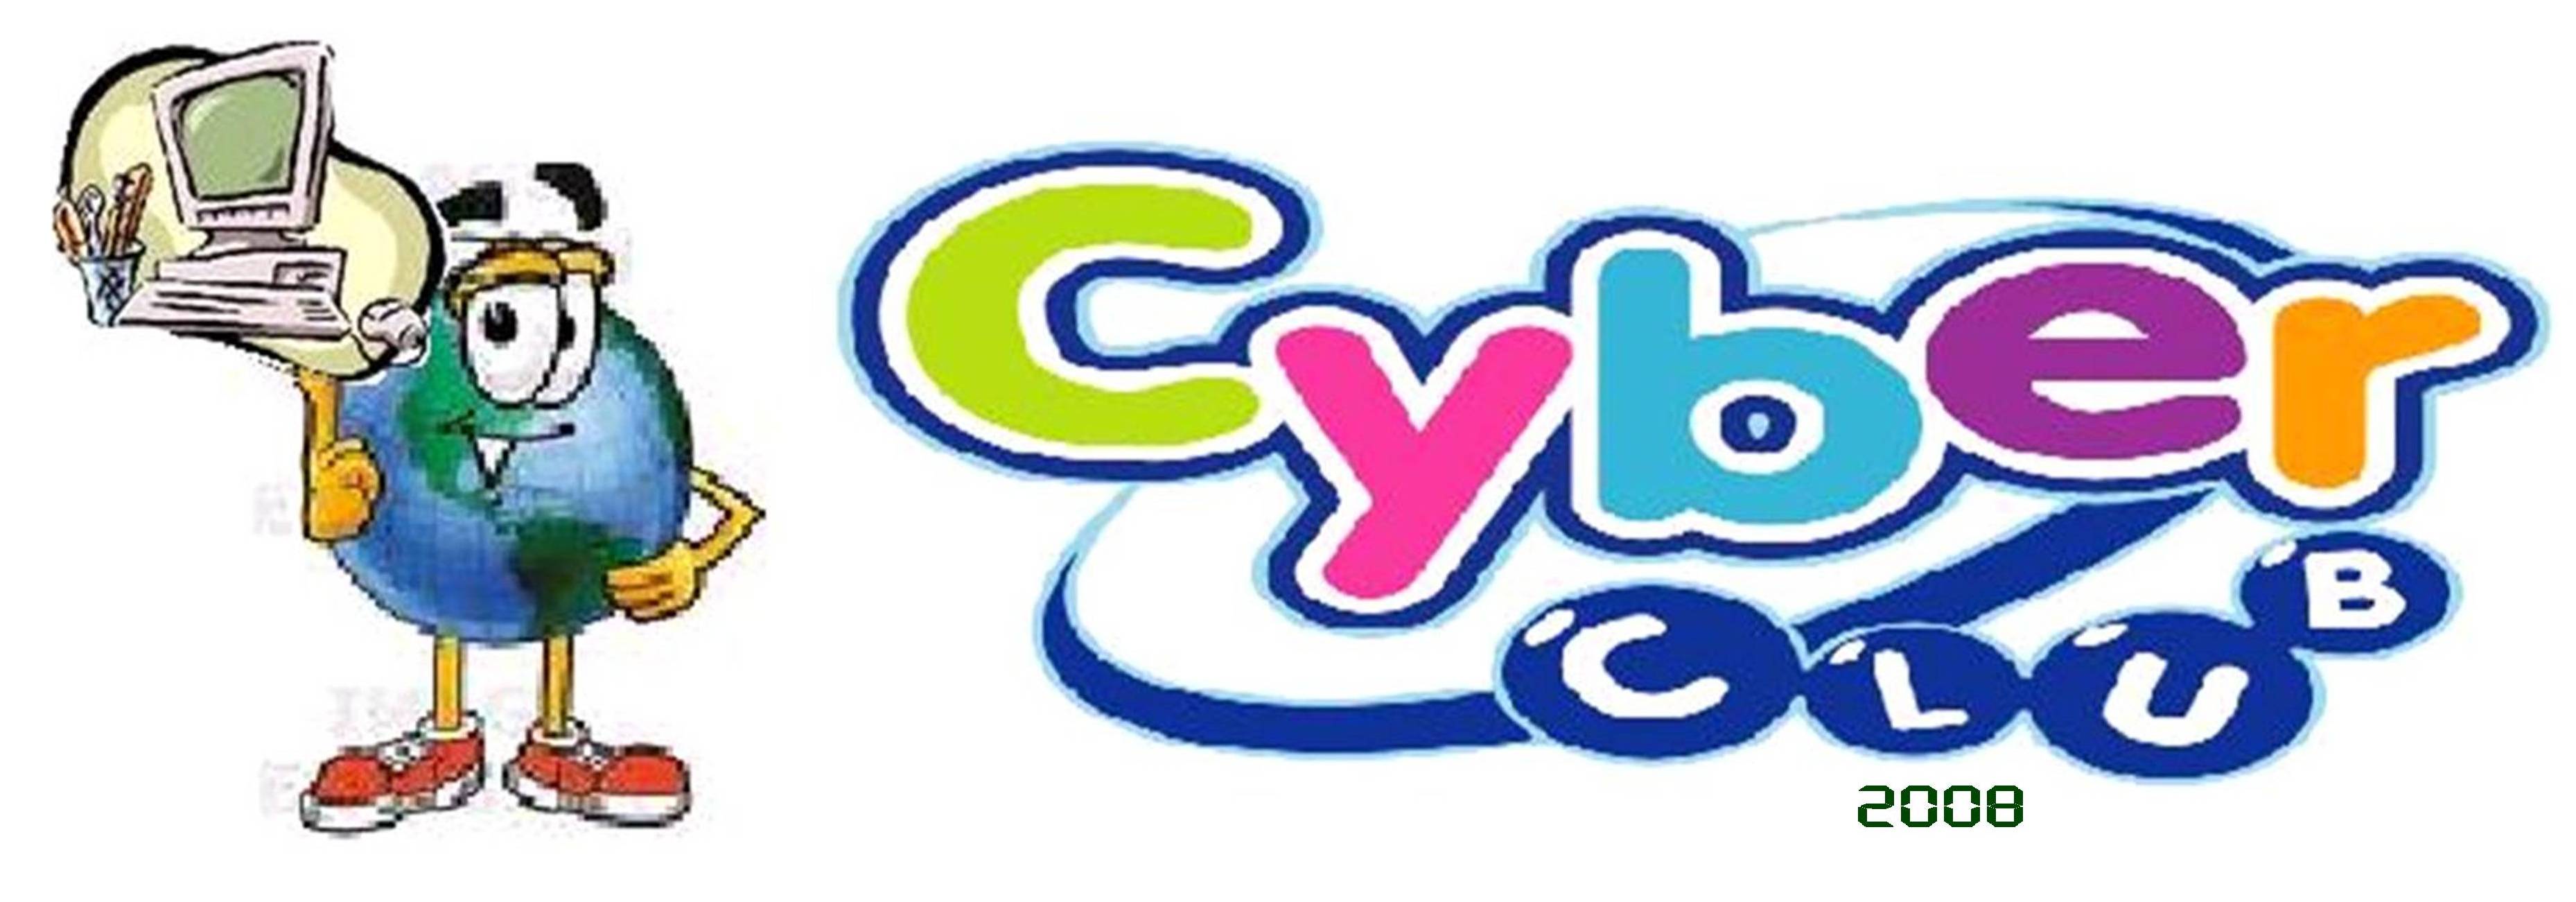 ciberclub Logo photo - 1